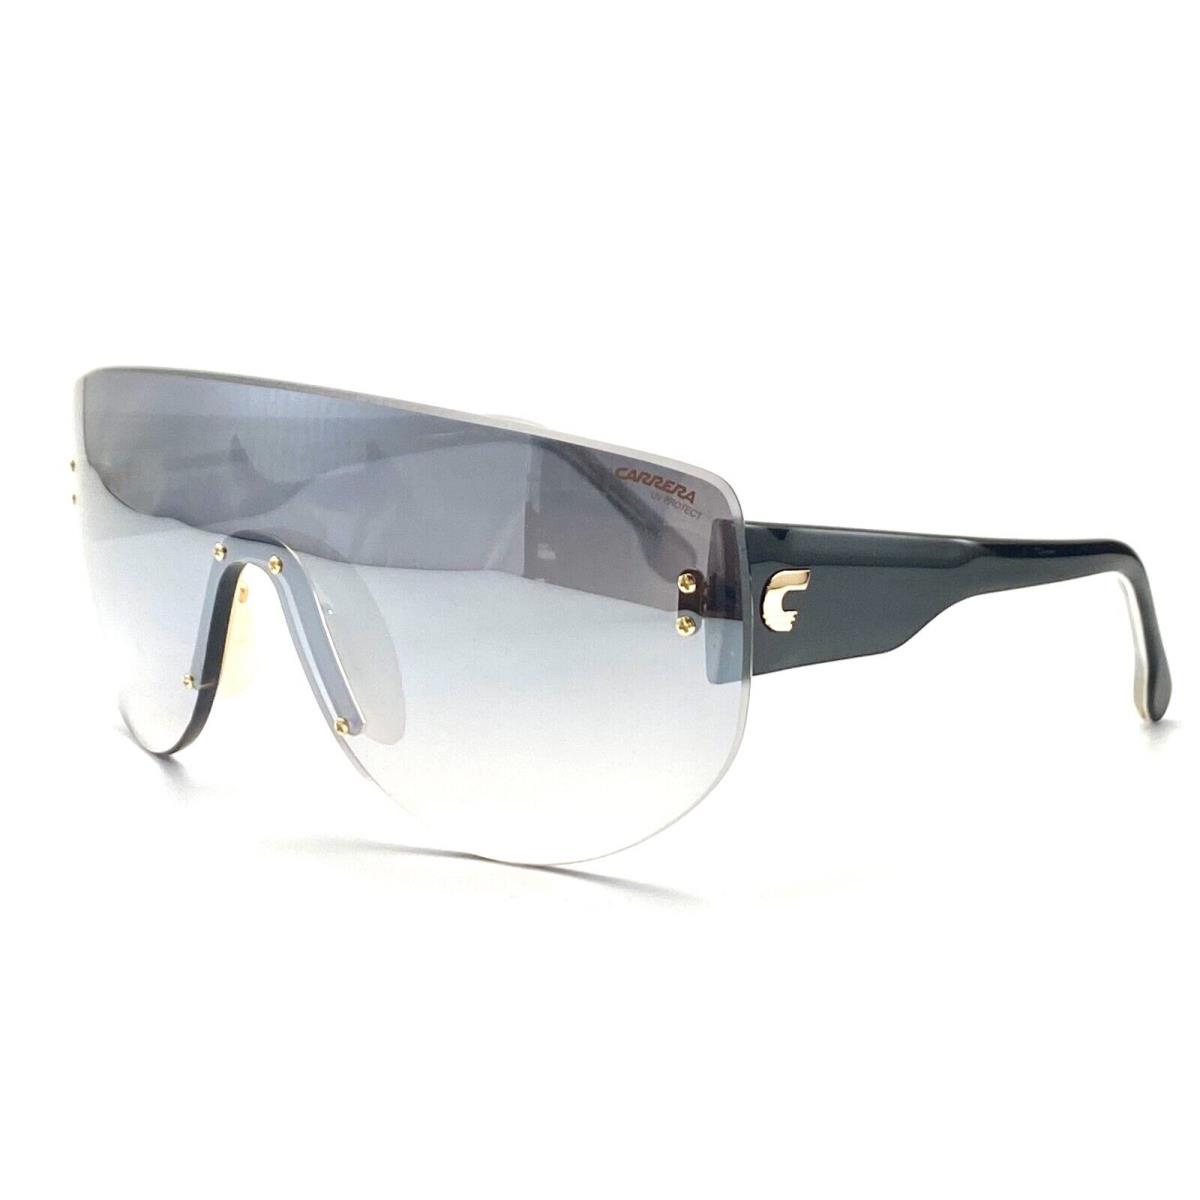 Carrera Flagbag 12 79DIC Black Sunglasses 99-01 140 V - Frame: Black, Lens: Gray